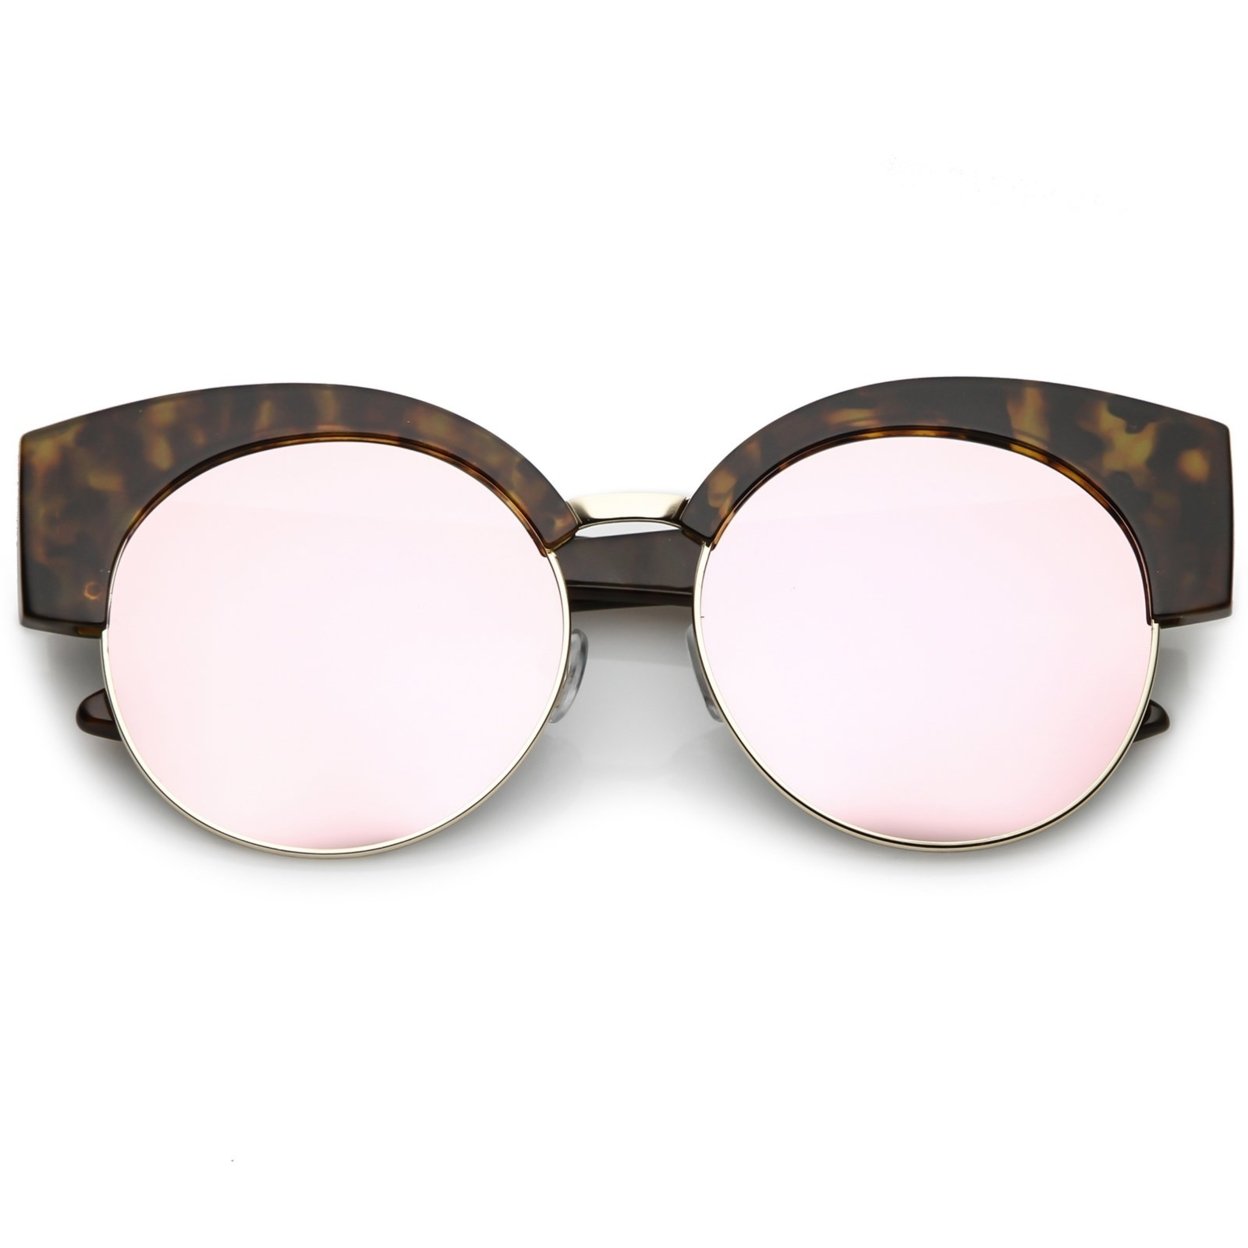 Women's Half Frame Oversize Cat Eye Sunglasses Round Mirrored Flat Lens 59mm - Black Gold / Magenta Mirror